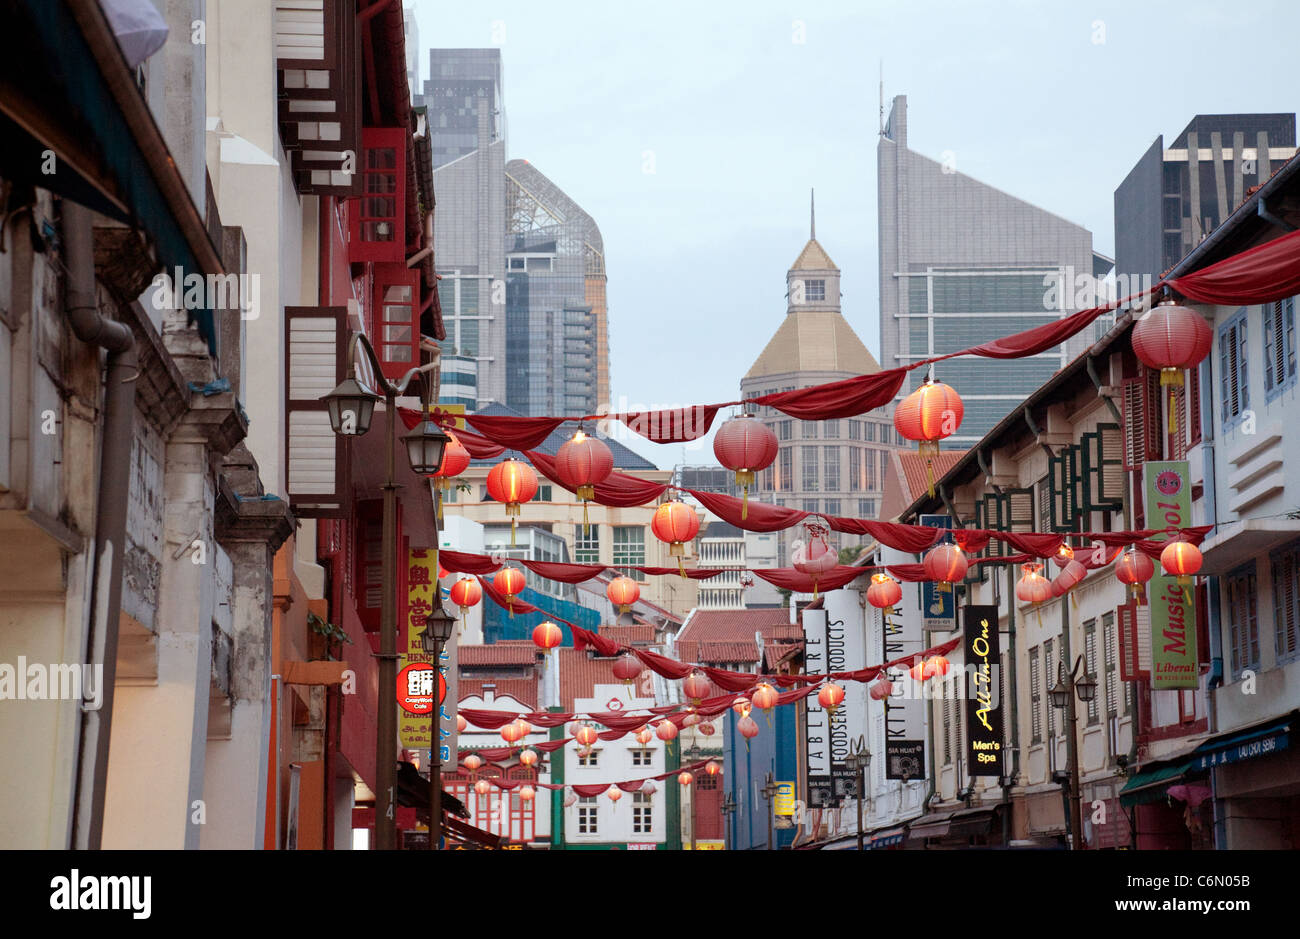 Street scene, Chinatown Singapore asia Stock Photo